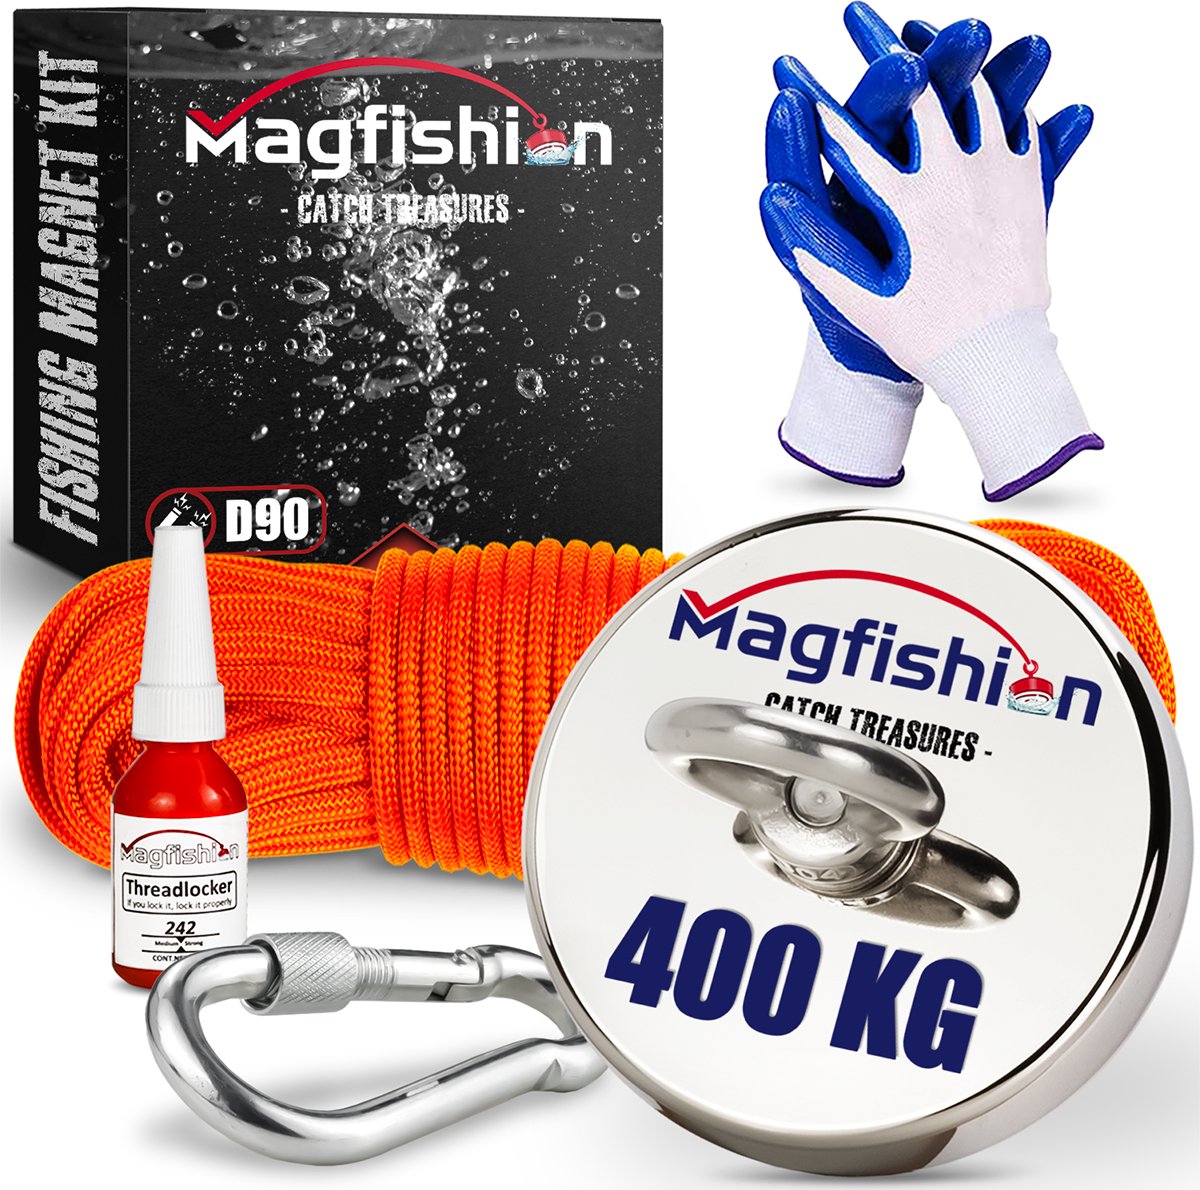 Magfishion Magneetvissen Set - 400 Kg - Vismagneet - 20 Meter Lang Touw - Magneetvissen Starterspakket - Magneet Vissen